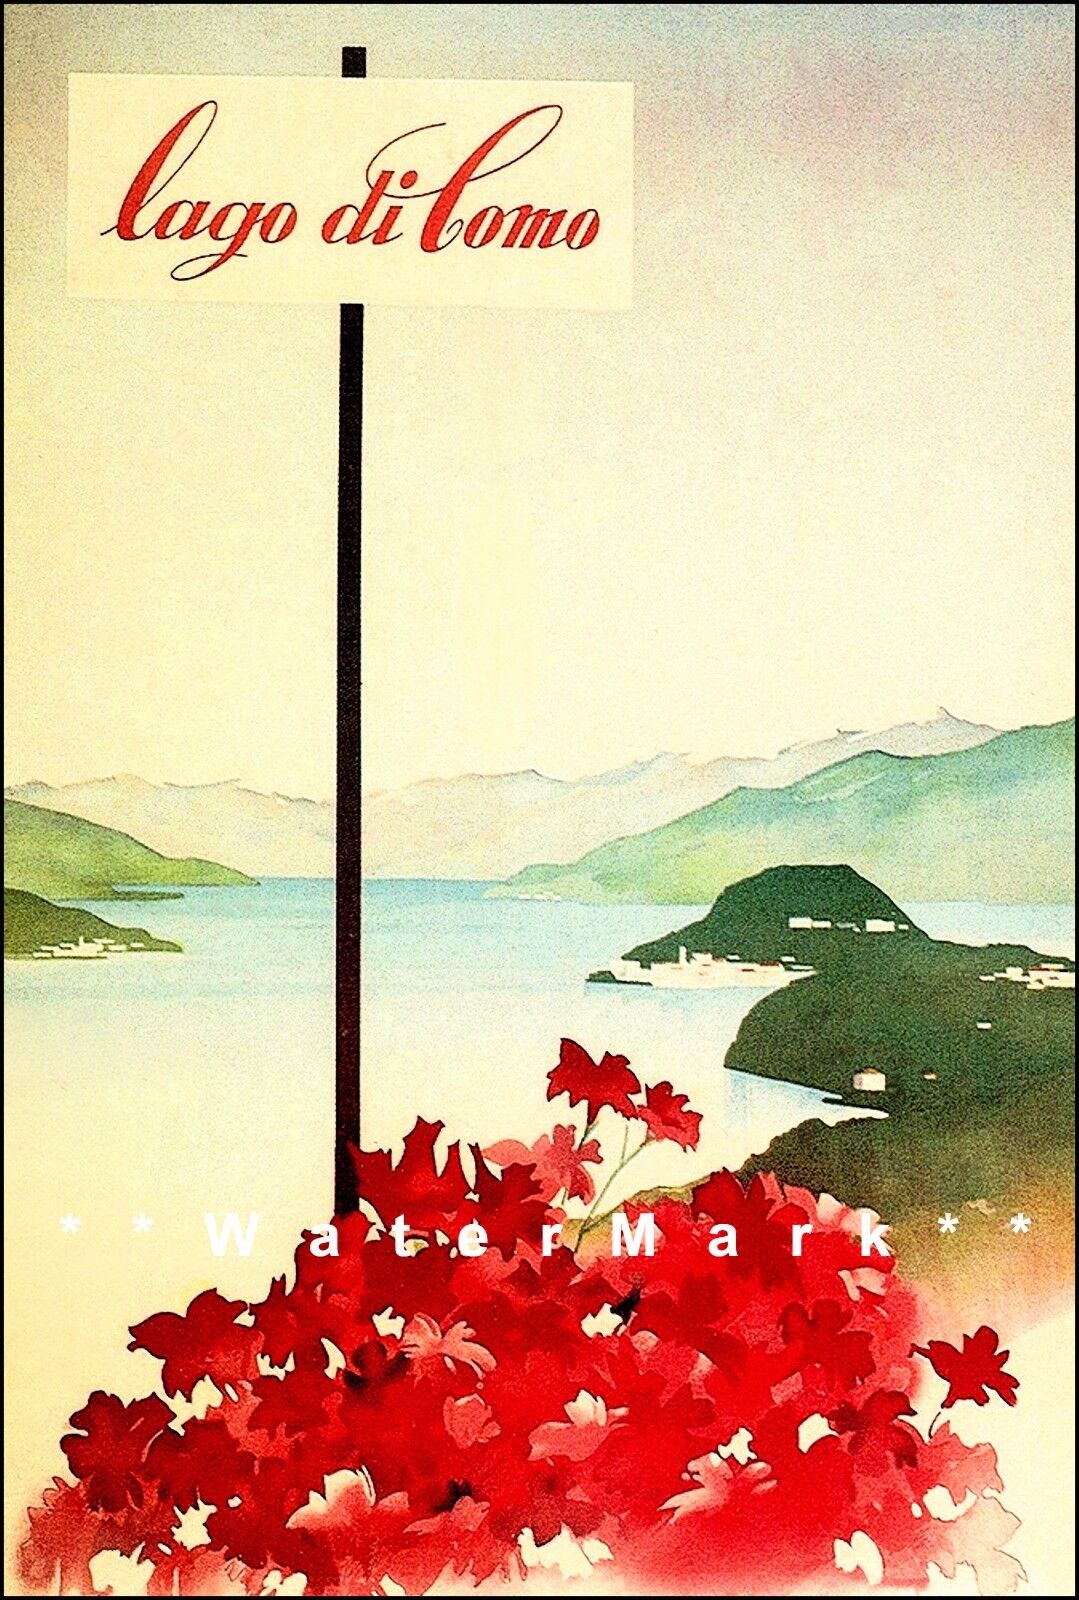 Lake Como Italy Lago Di Como Vintage Poster Print Italian Travel Advert Art  | eBay